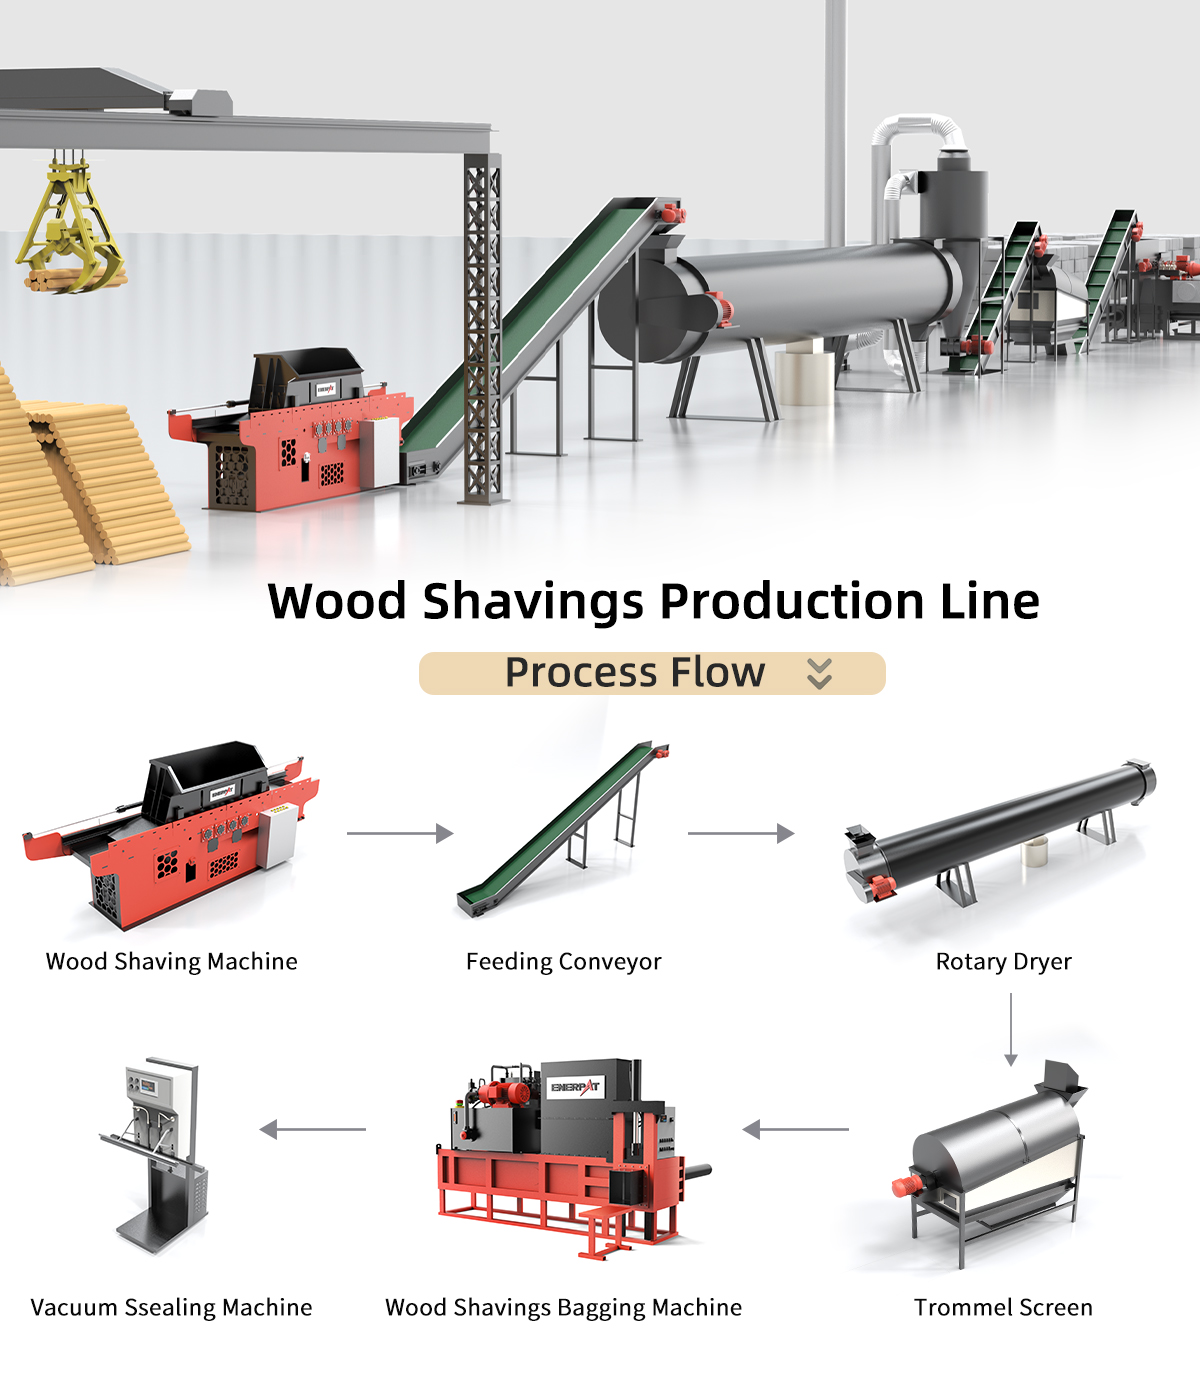 Wood Shaving Production Line